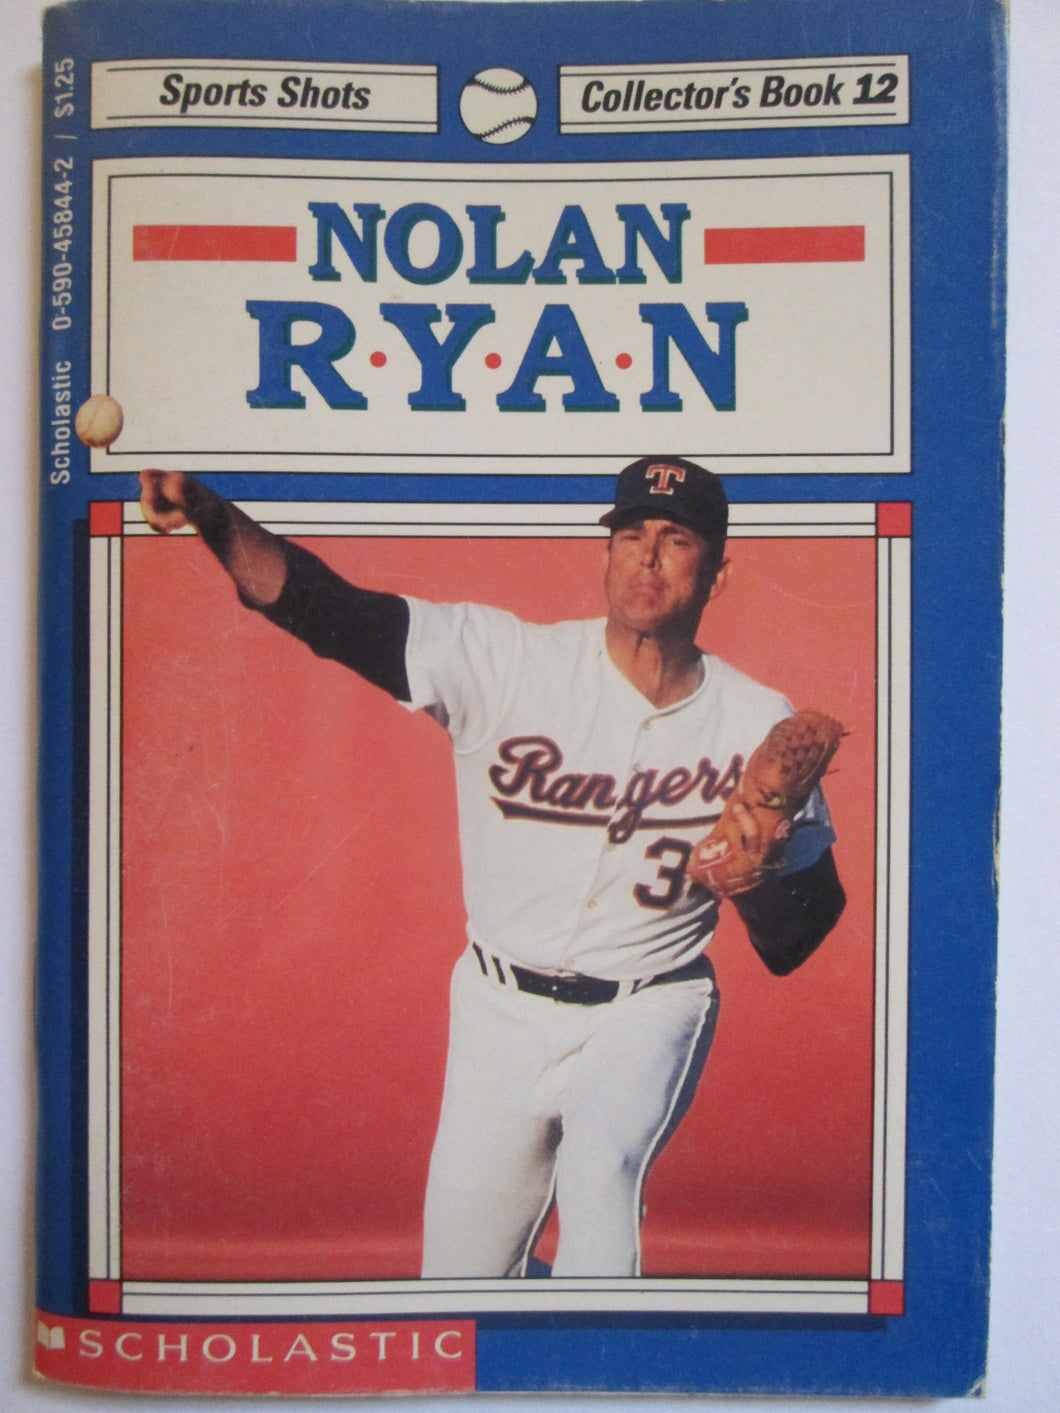 Nolan Ryan Sports Shots Collectors Book 12 PB 1992